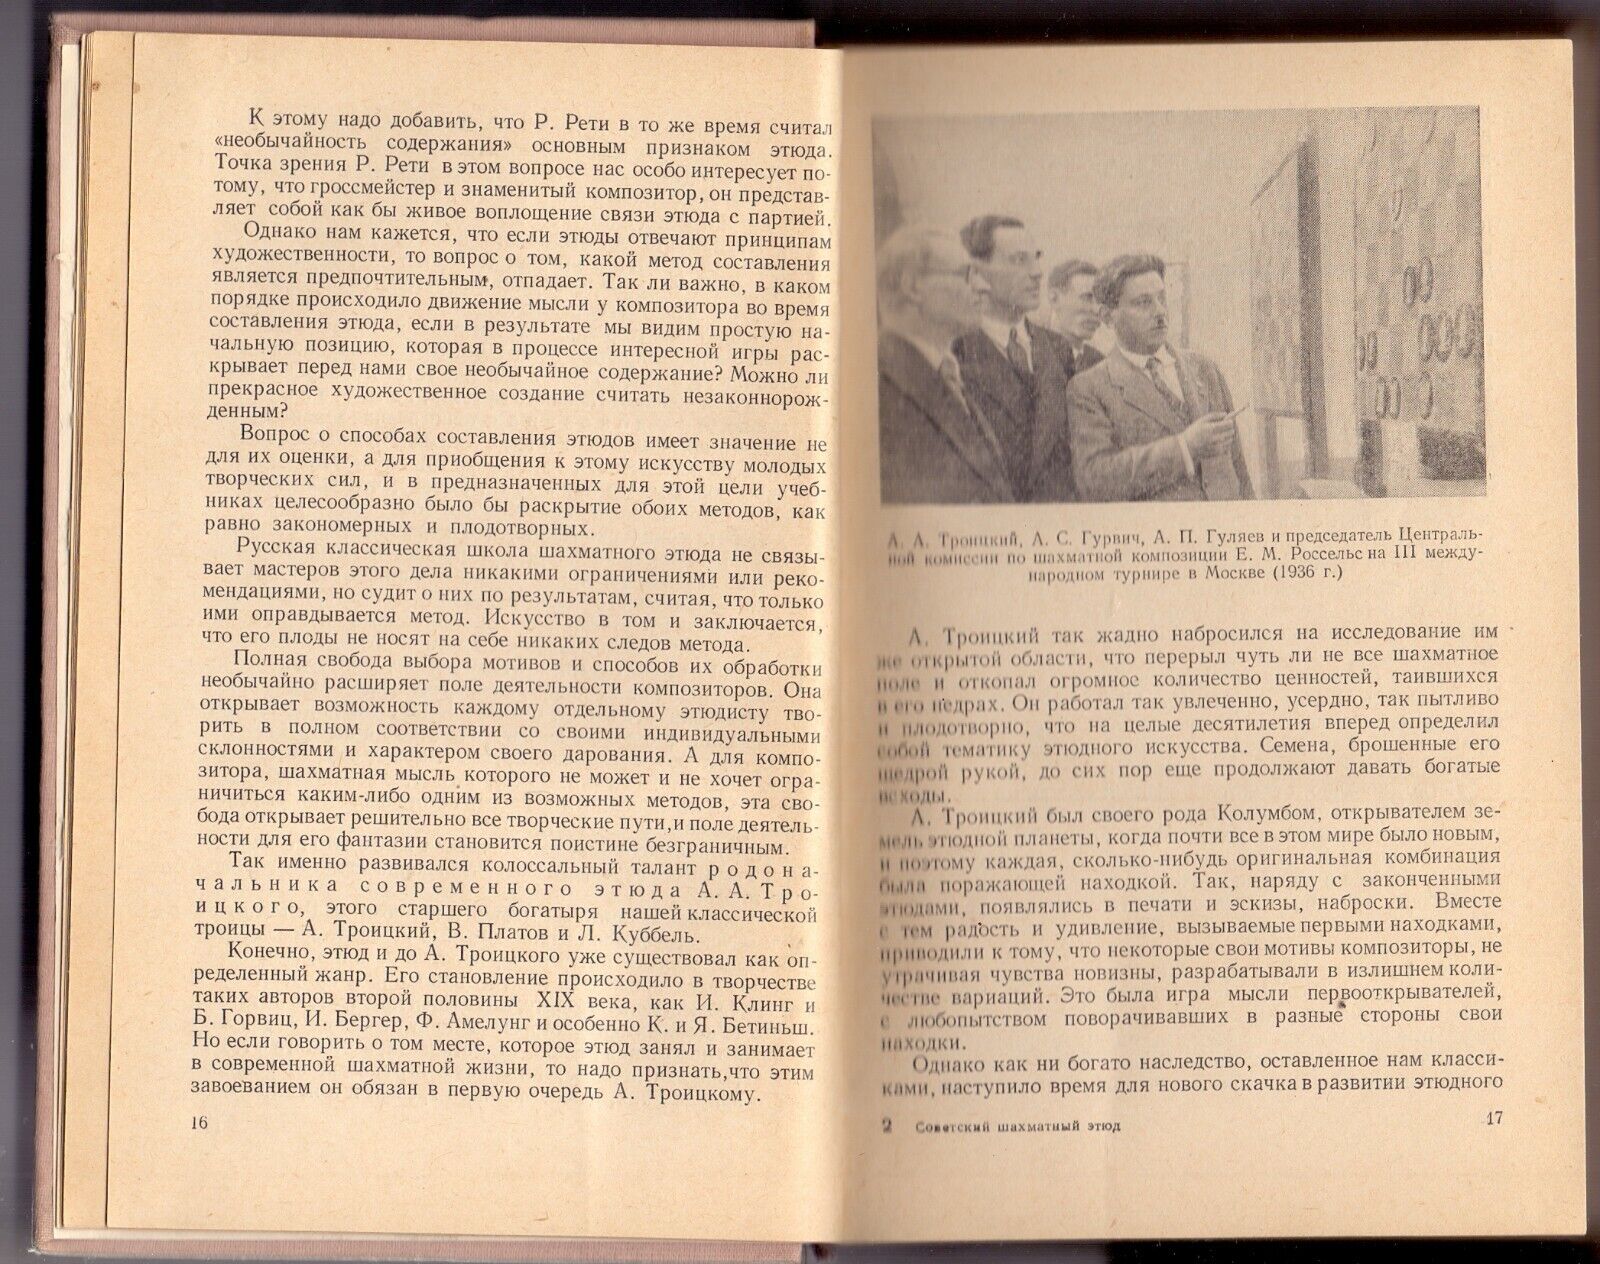 11602.Russian Soviet chess book: A. Kasantsev. Soviet chess study. Collection. 1955